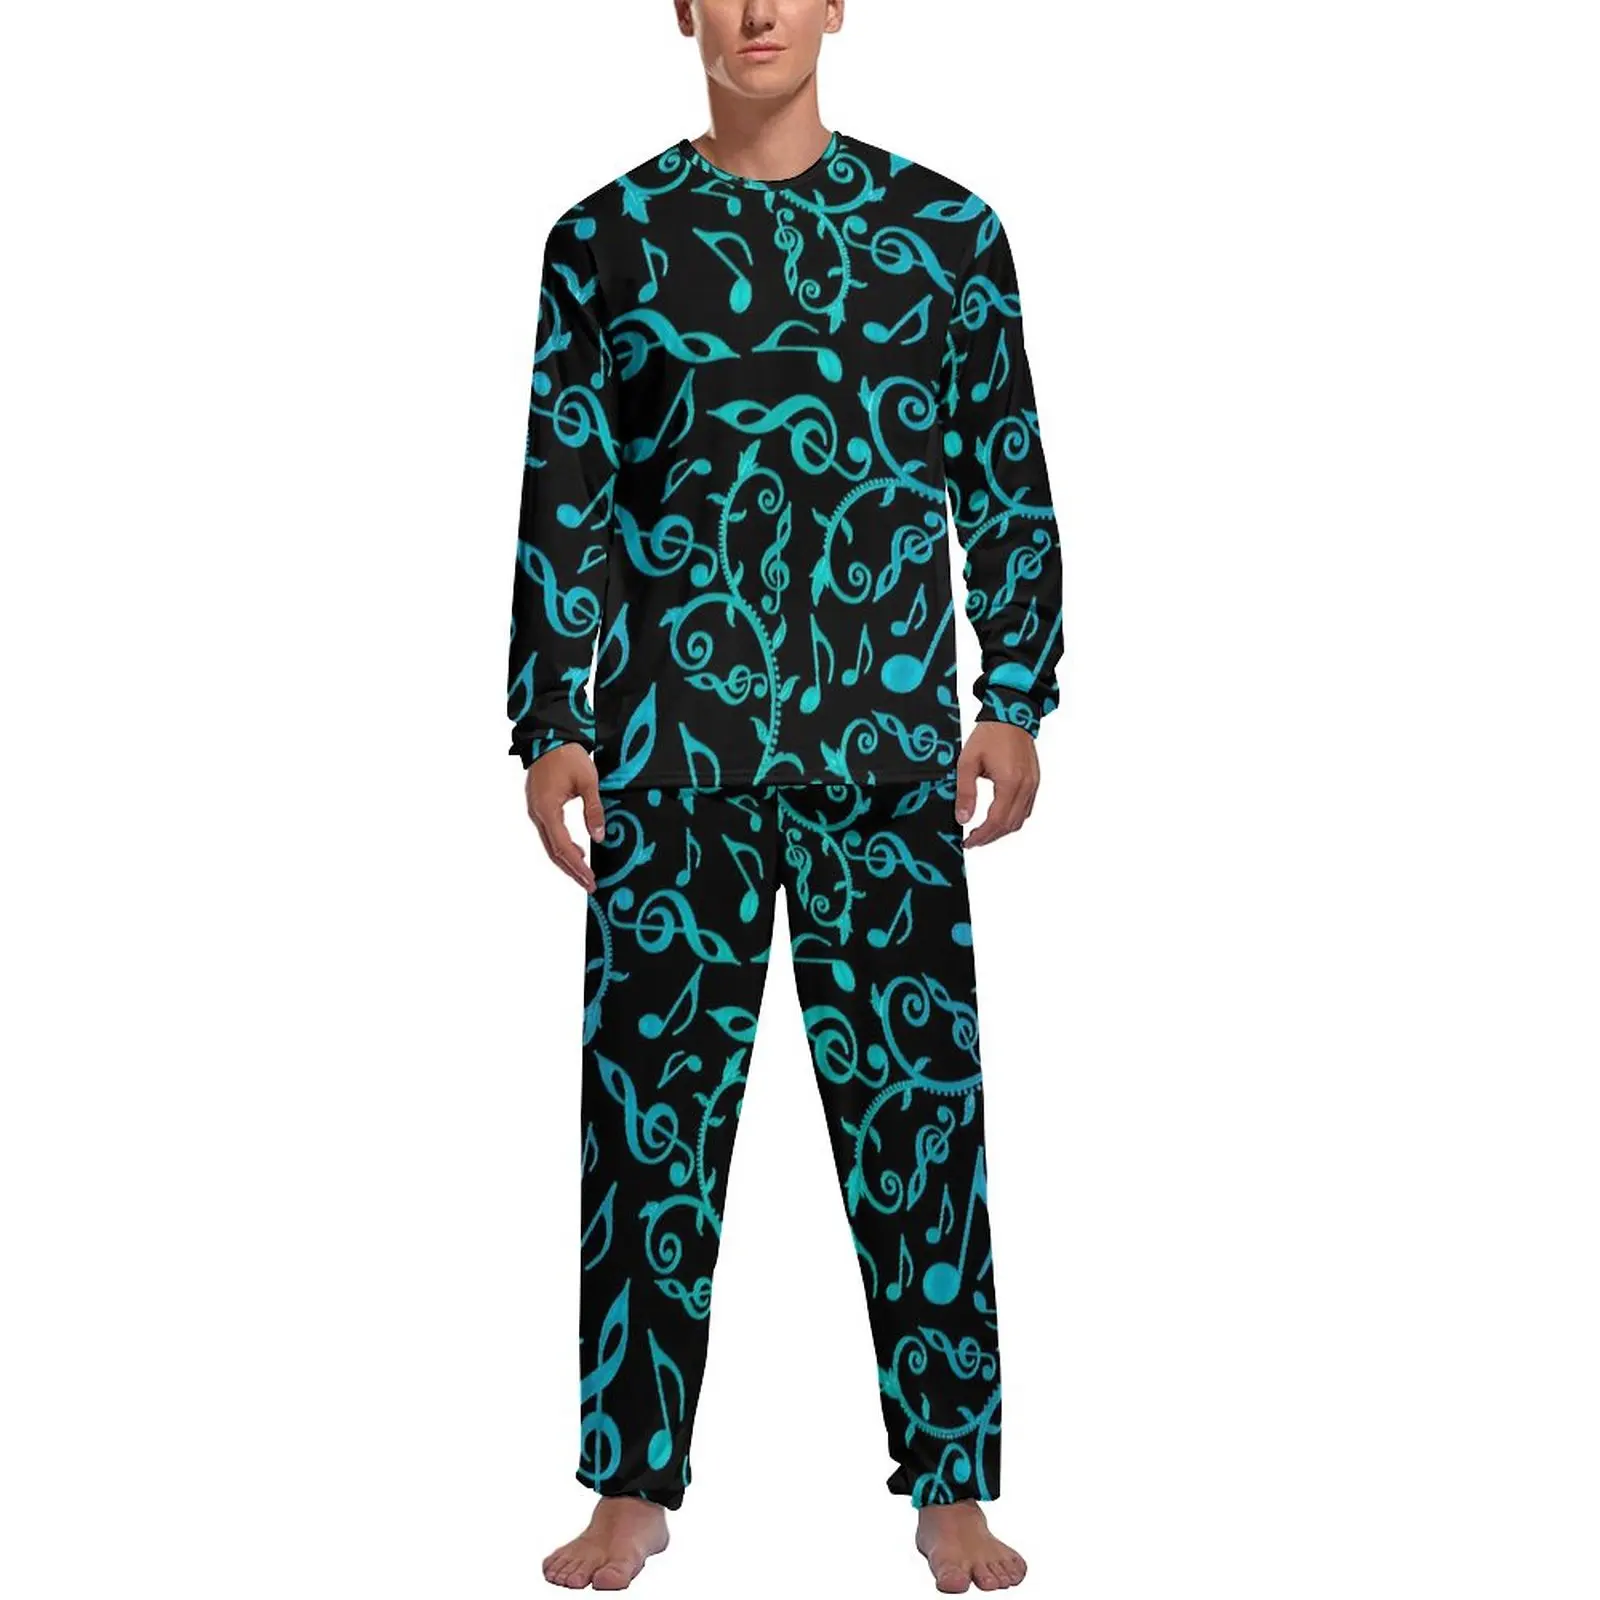 Gradient Music Notes Pajamas Long Sleeves Blue Green Purple 2 Pieces Casual Pajamas Set Autumn Man Design Cute Sleepwear